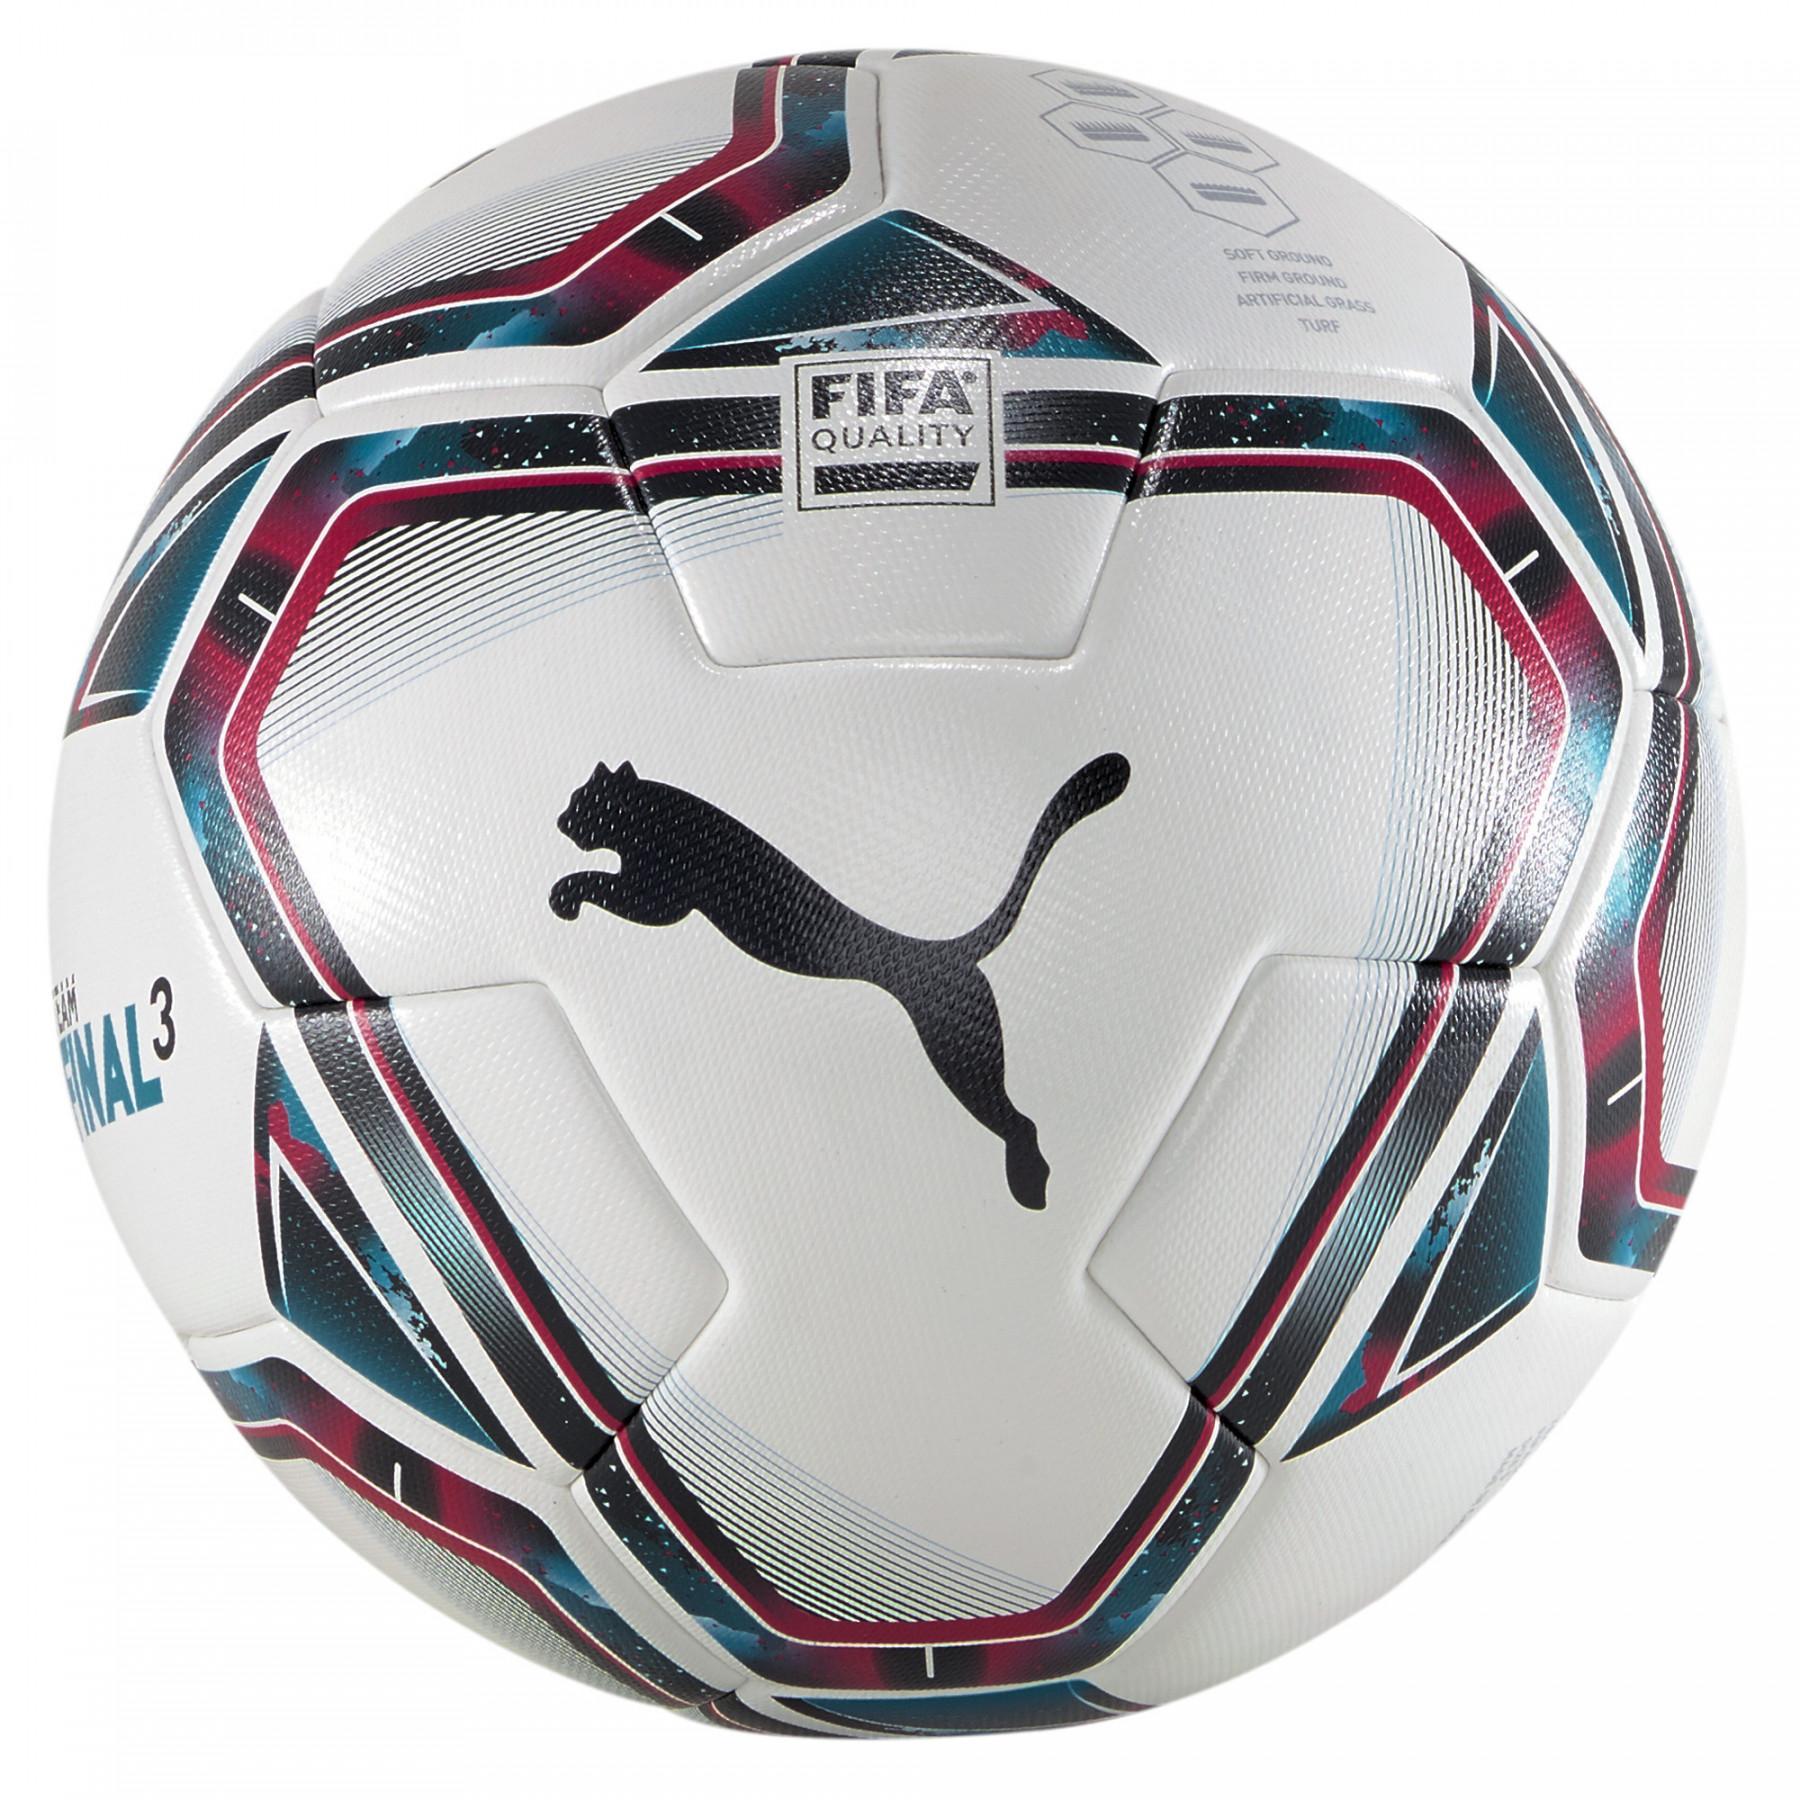 Ballong Puma Final 3 Fifa Quality